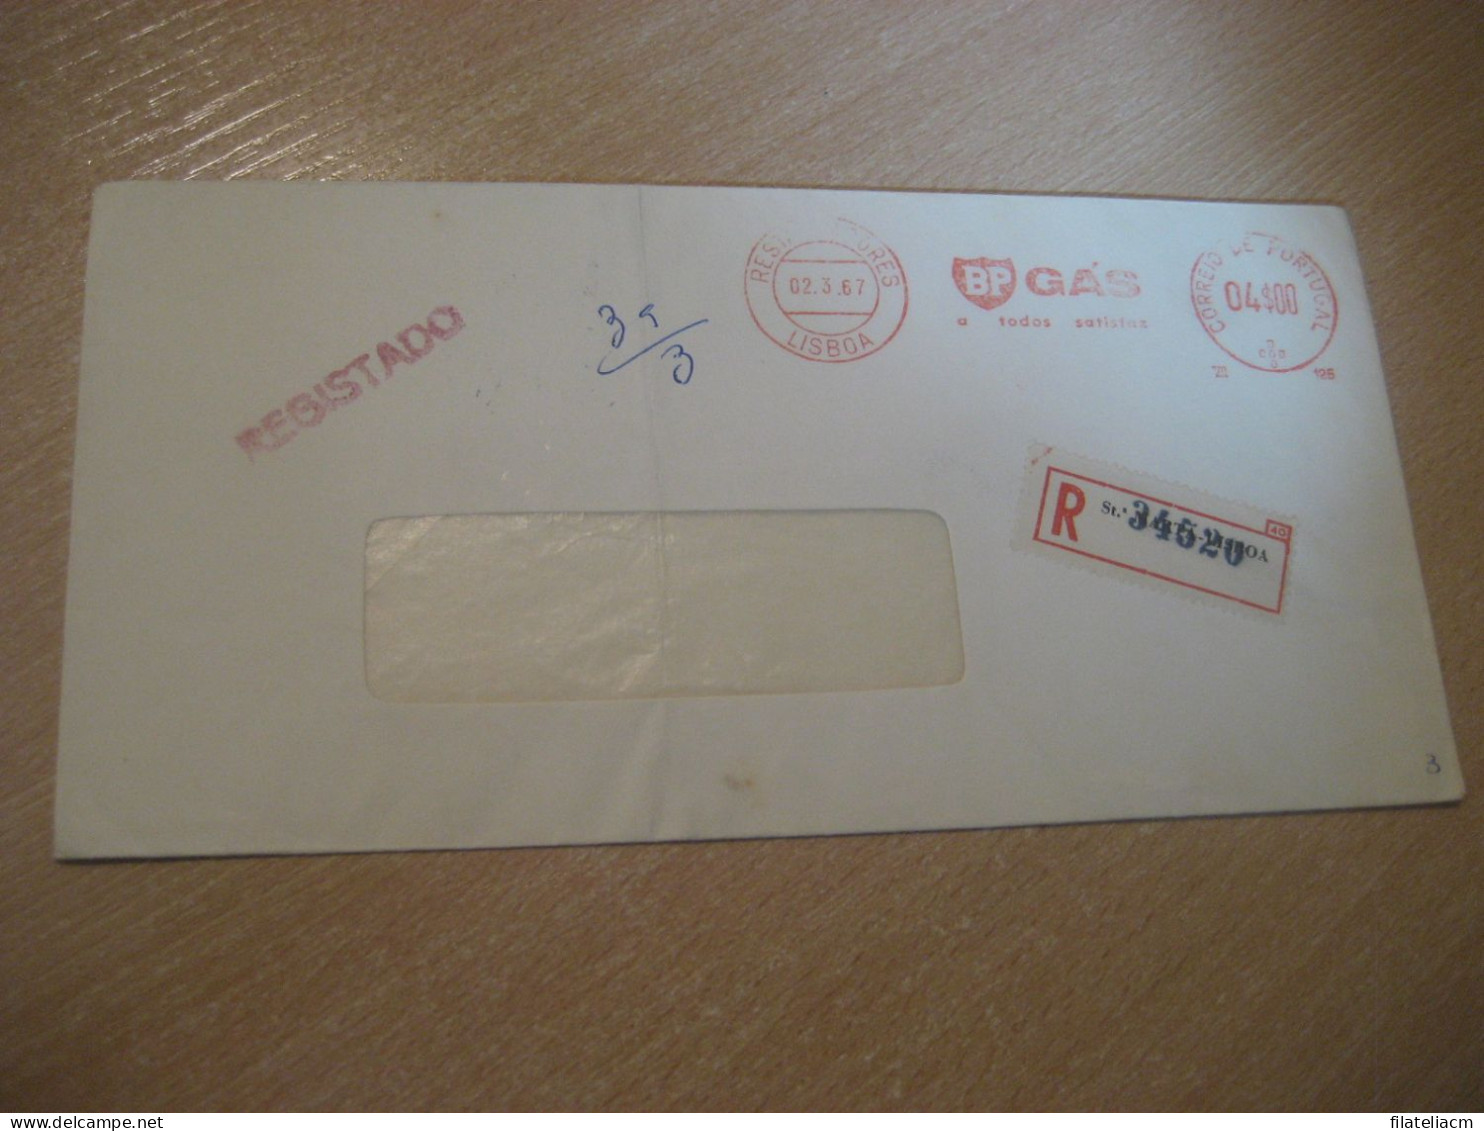 LISBOA 1967 BP Gas Oil Registered Meter Mail Cancel Cover PORTUGAL - Briefe U. Dokumente